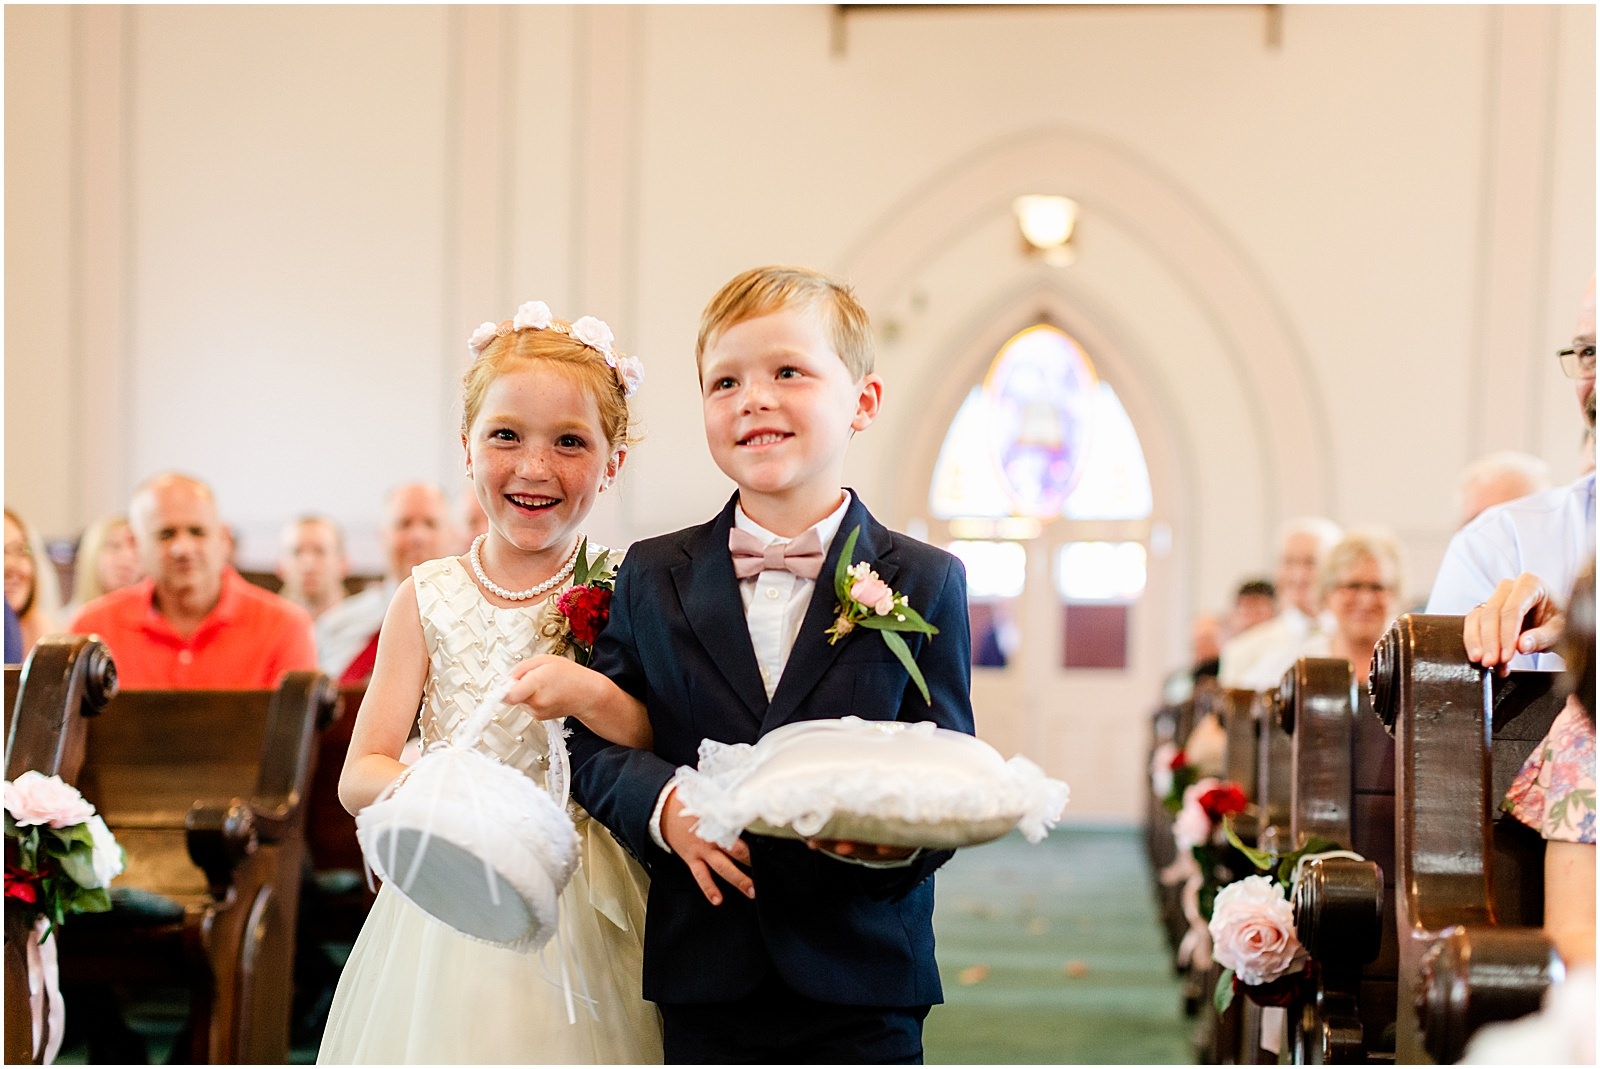 Deidra and Andrew | A Huntingburgh Indiana Wedding Bret and Brandie | Evansville Photographers | @bretandbrandie-0101.jpg